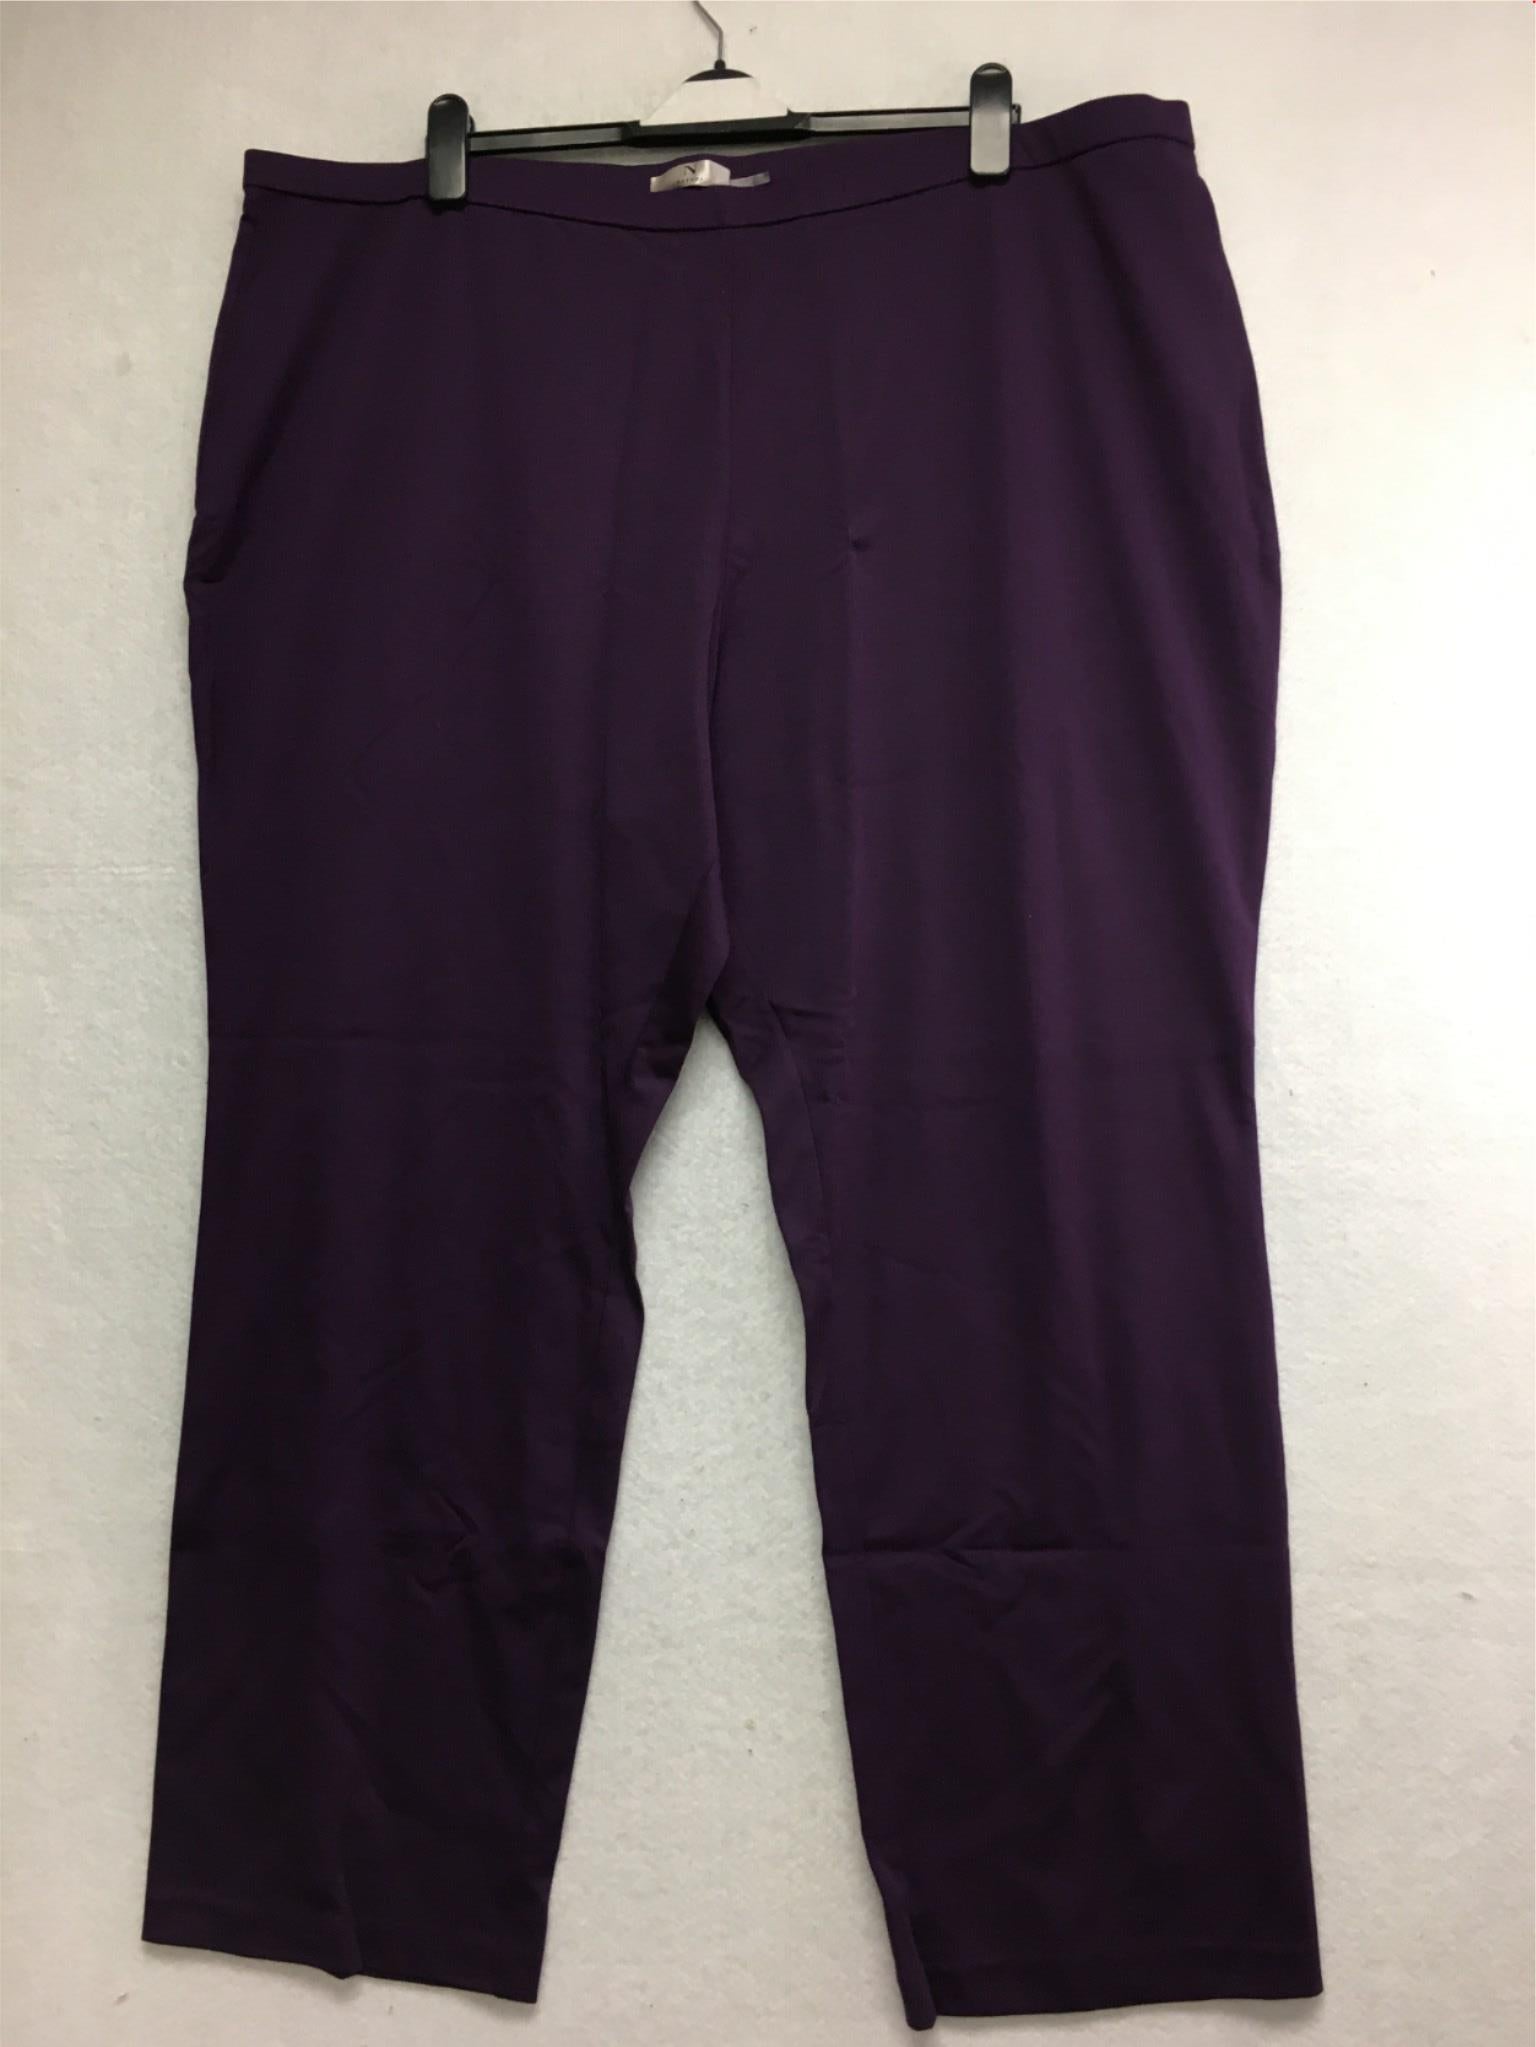 New N NATORI Solid Double Knit Pant Deep Purple XS